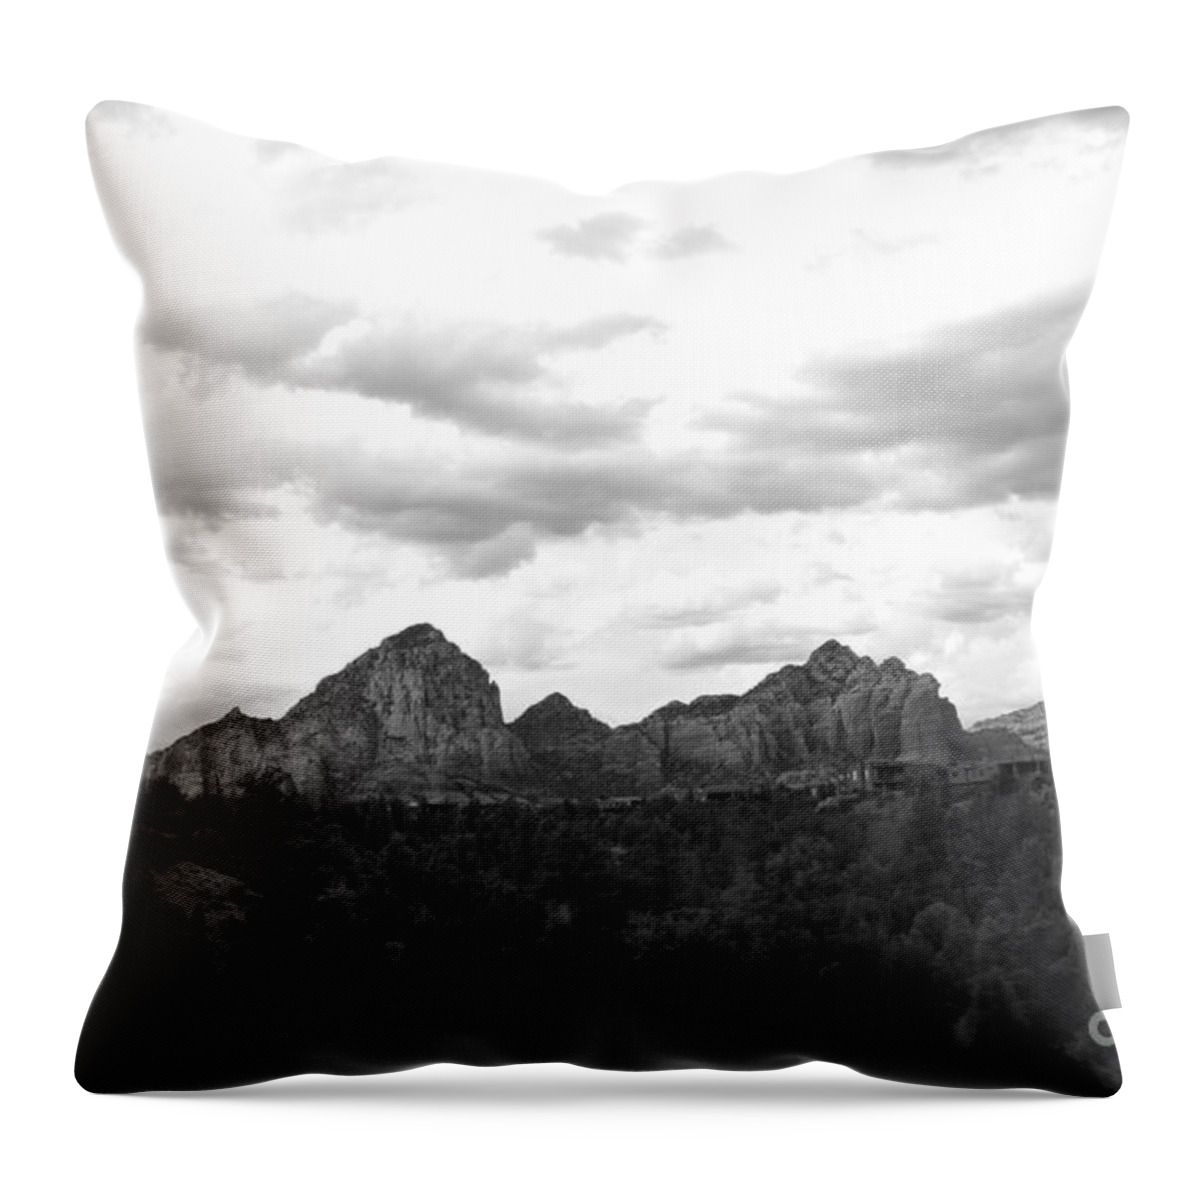  Throw Pillow featuring the photograph Sedonascape by Sharron Cuthbertson